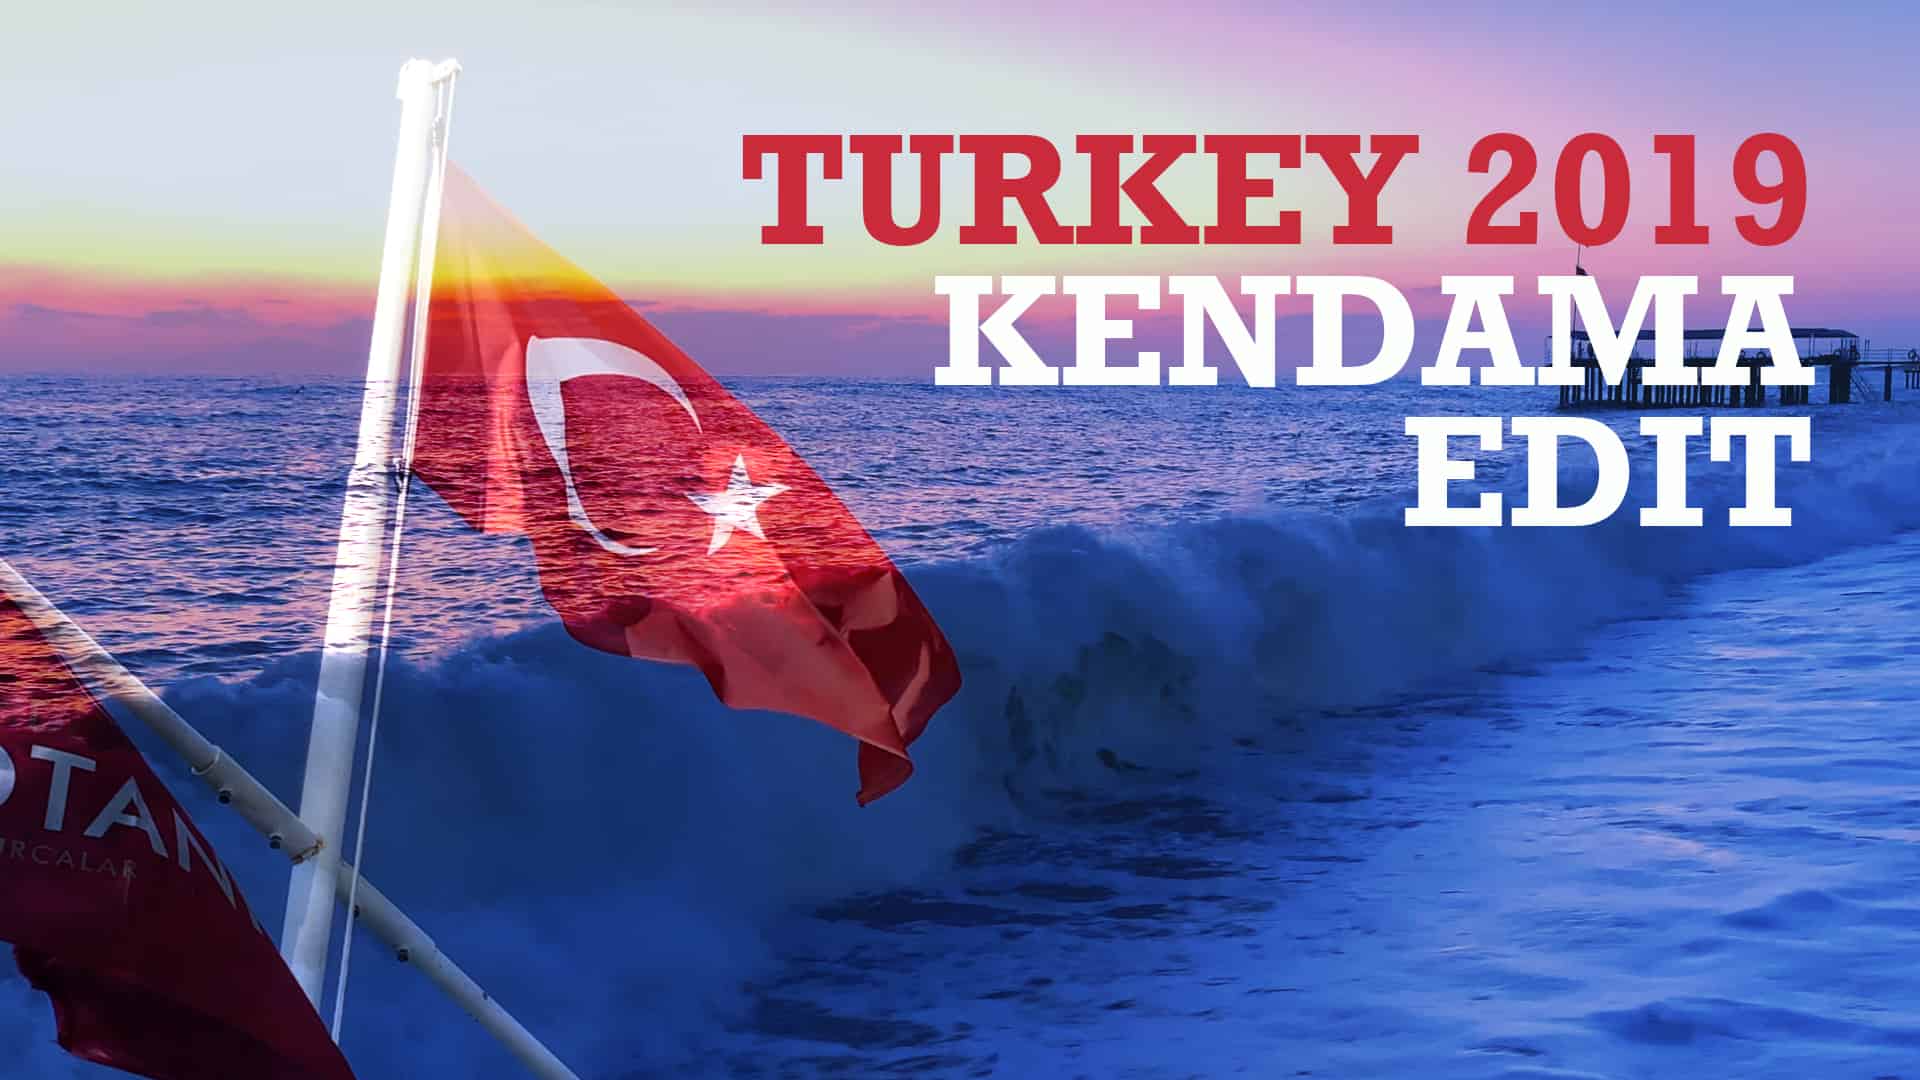 Yoegyu – Turkey 2019 Kendama Edit